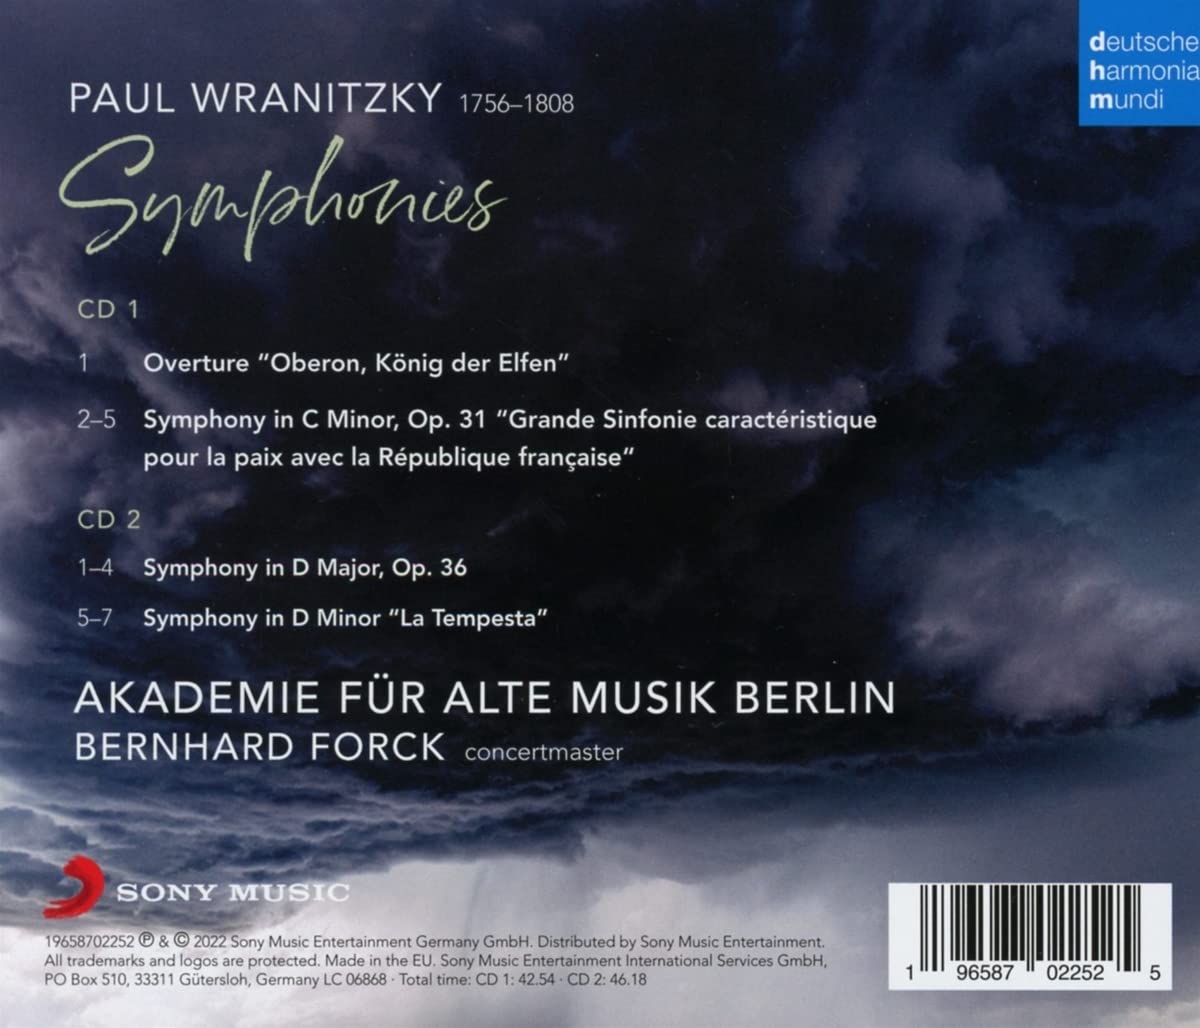 Bernhard Forck 폴 브라니츠키: 교향곡집 (Paul Wranitzky: Symphonies) 